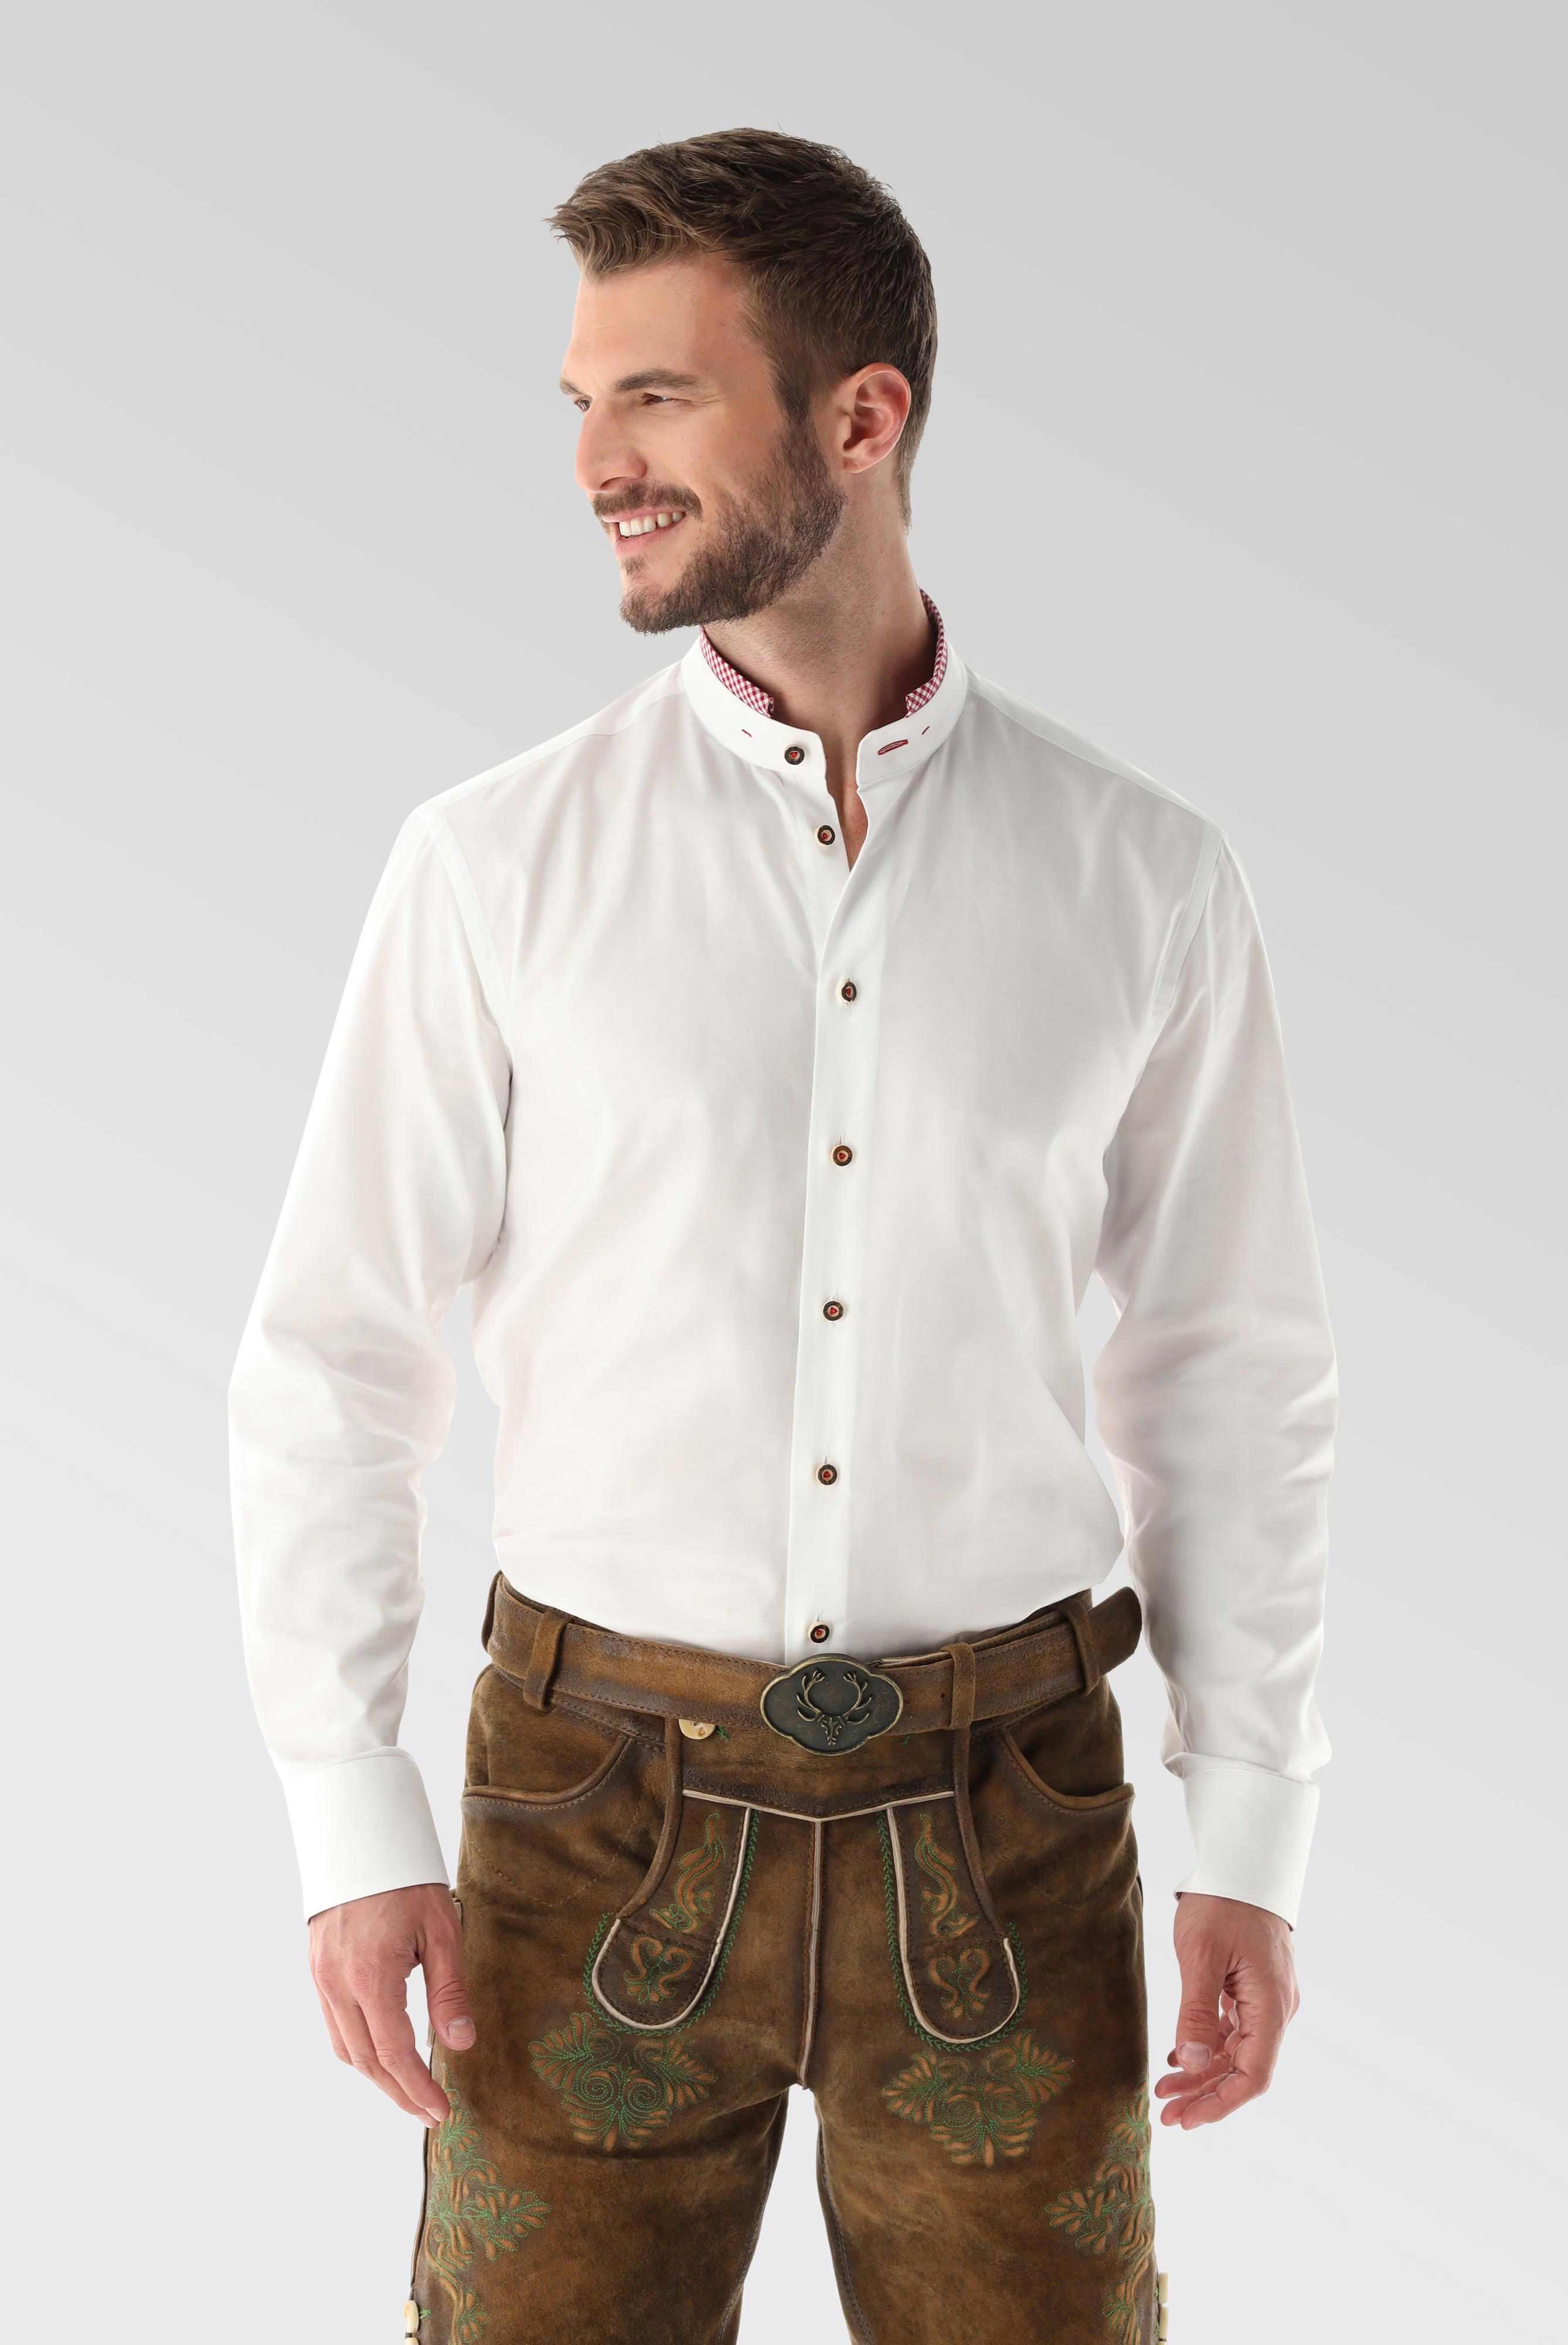 Festliche Hemden+Oxford Tradtional Shirt with coloured detail+20.2081.8Q.150251.005.38